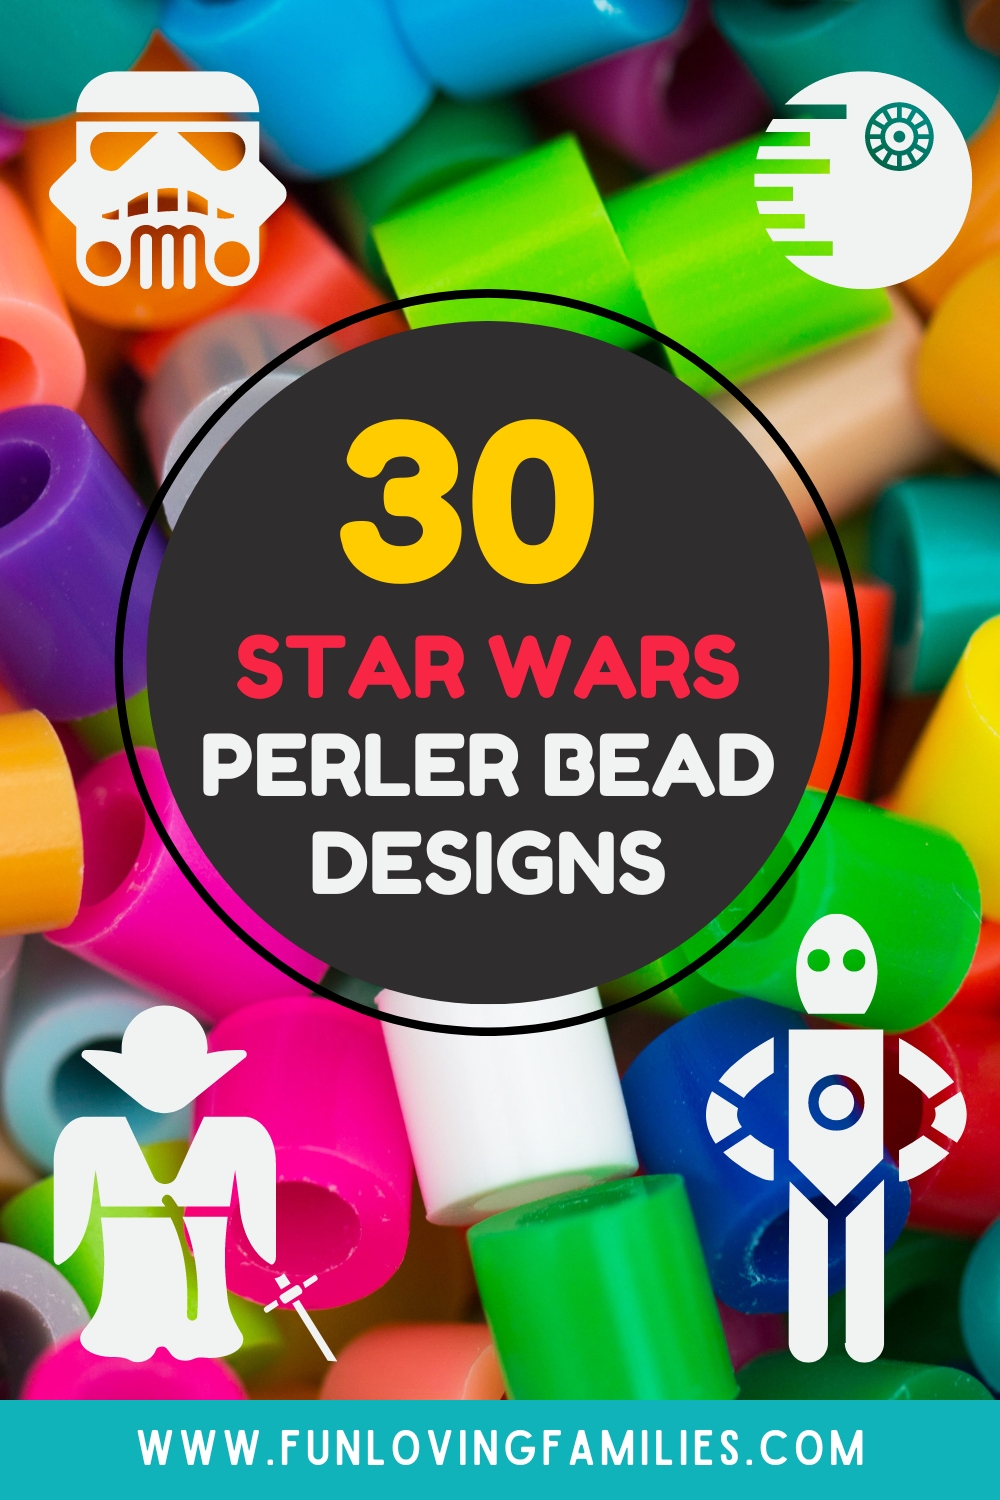 Star Wars Perler Bead ideas